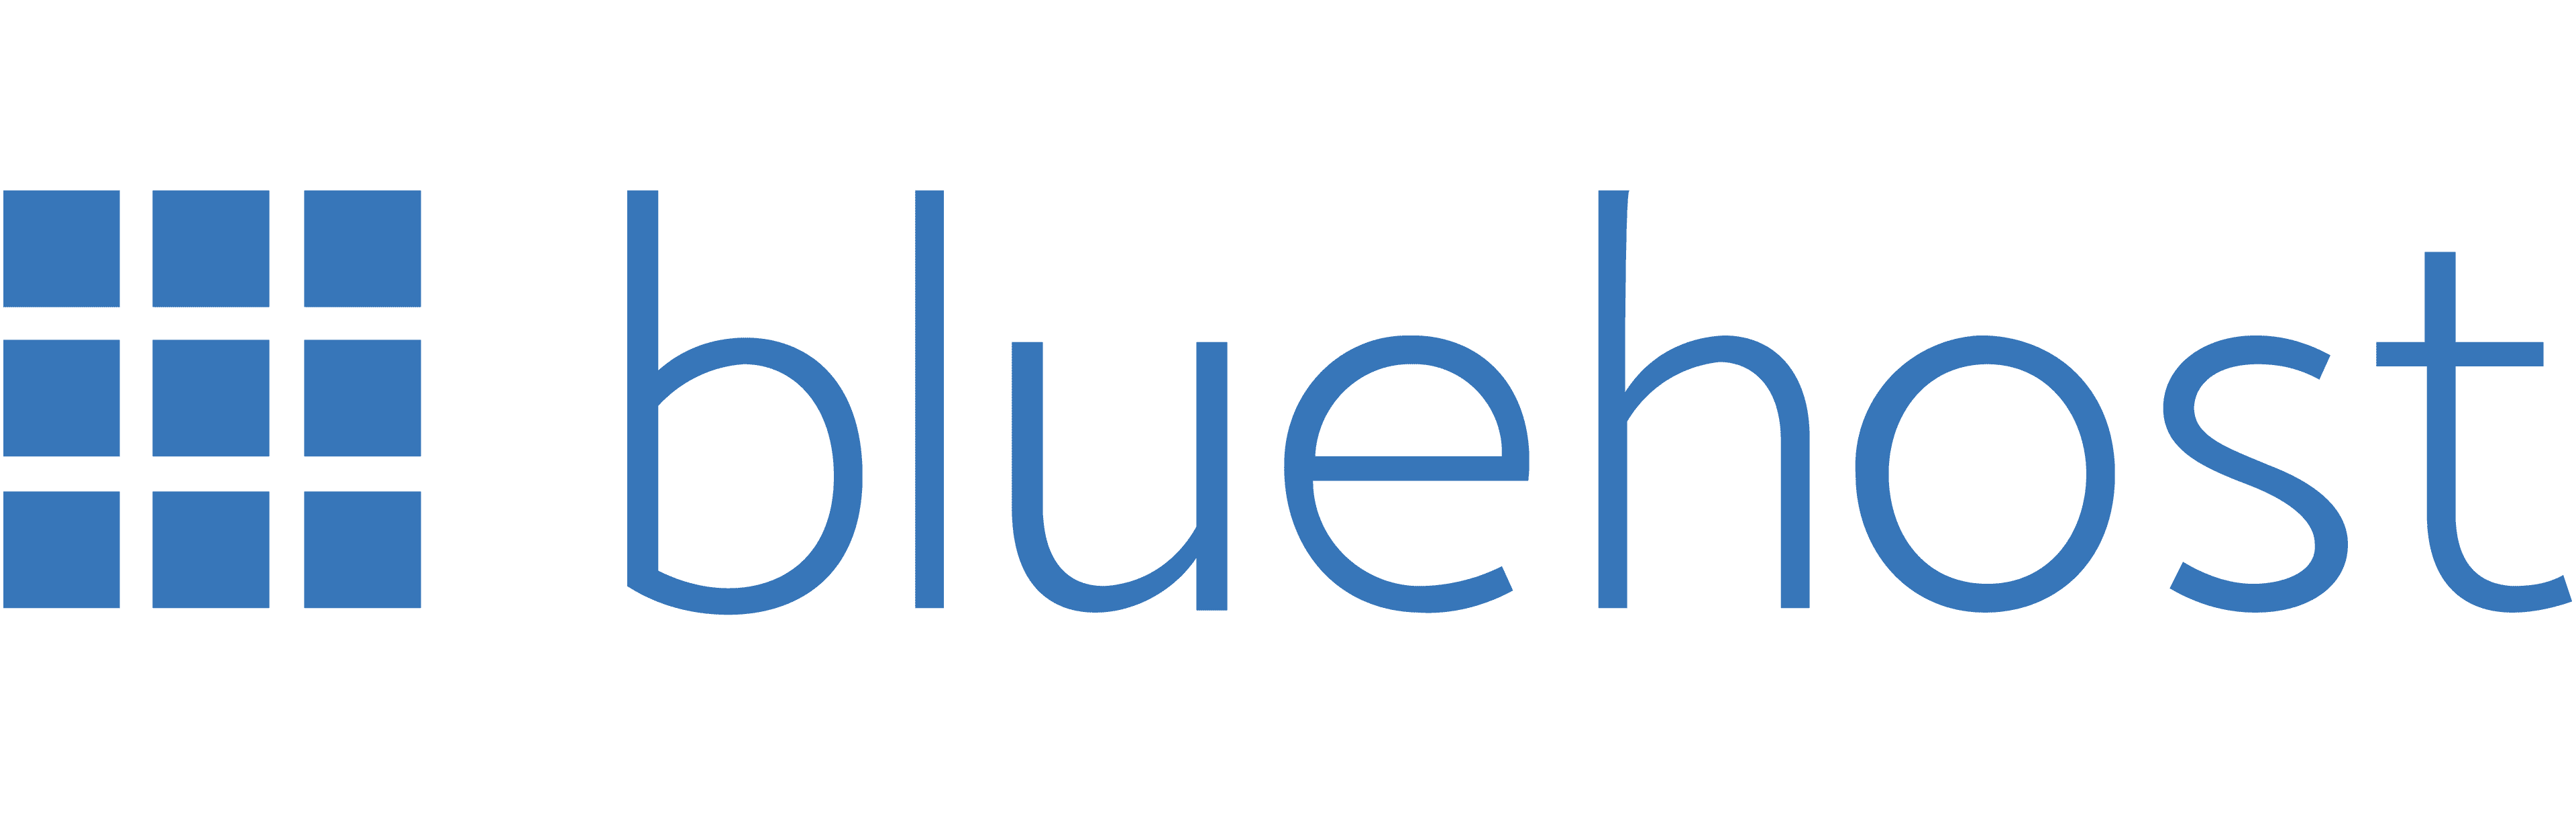 Bluehost-logo